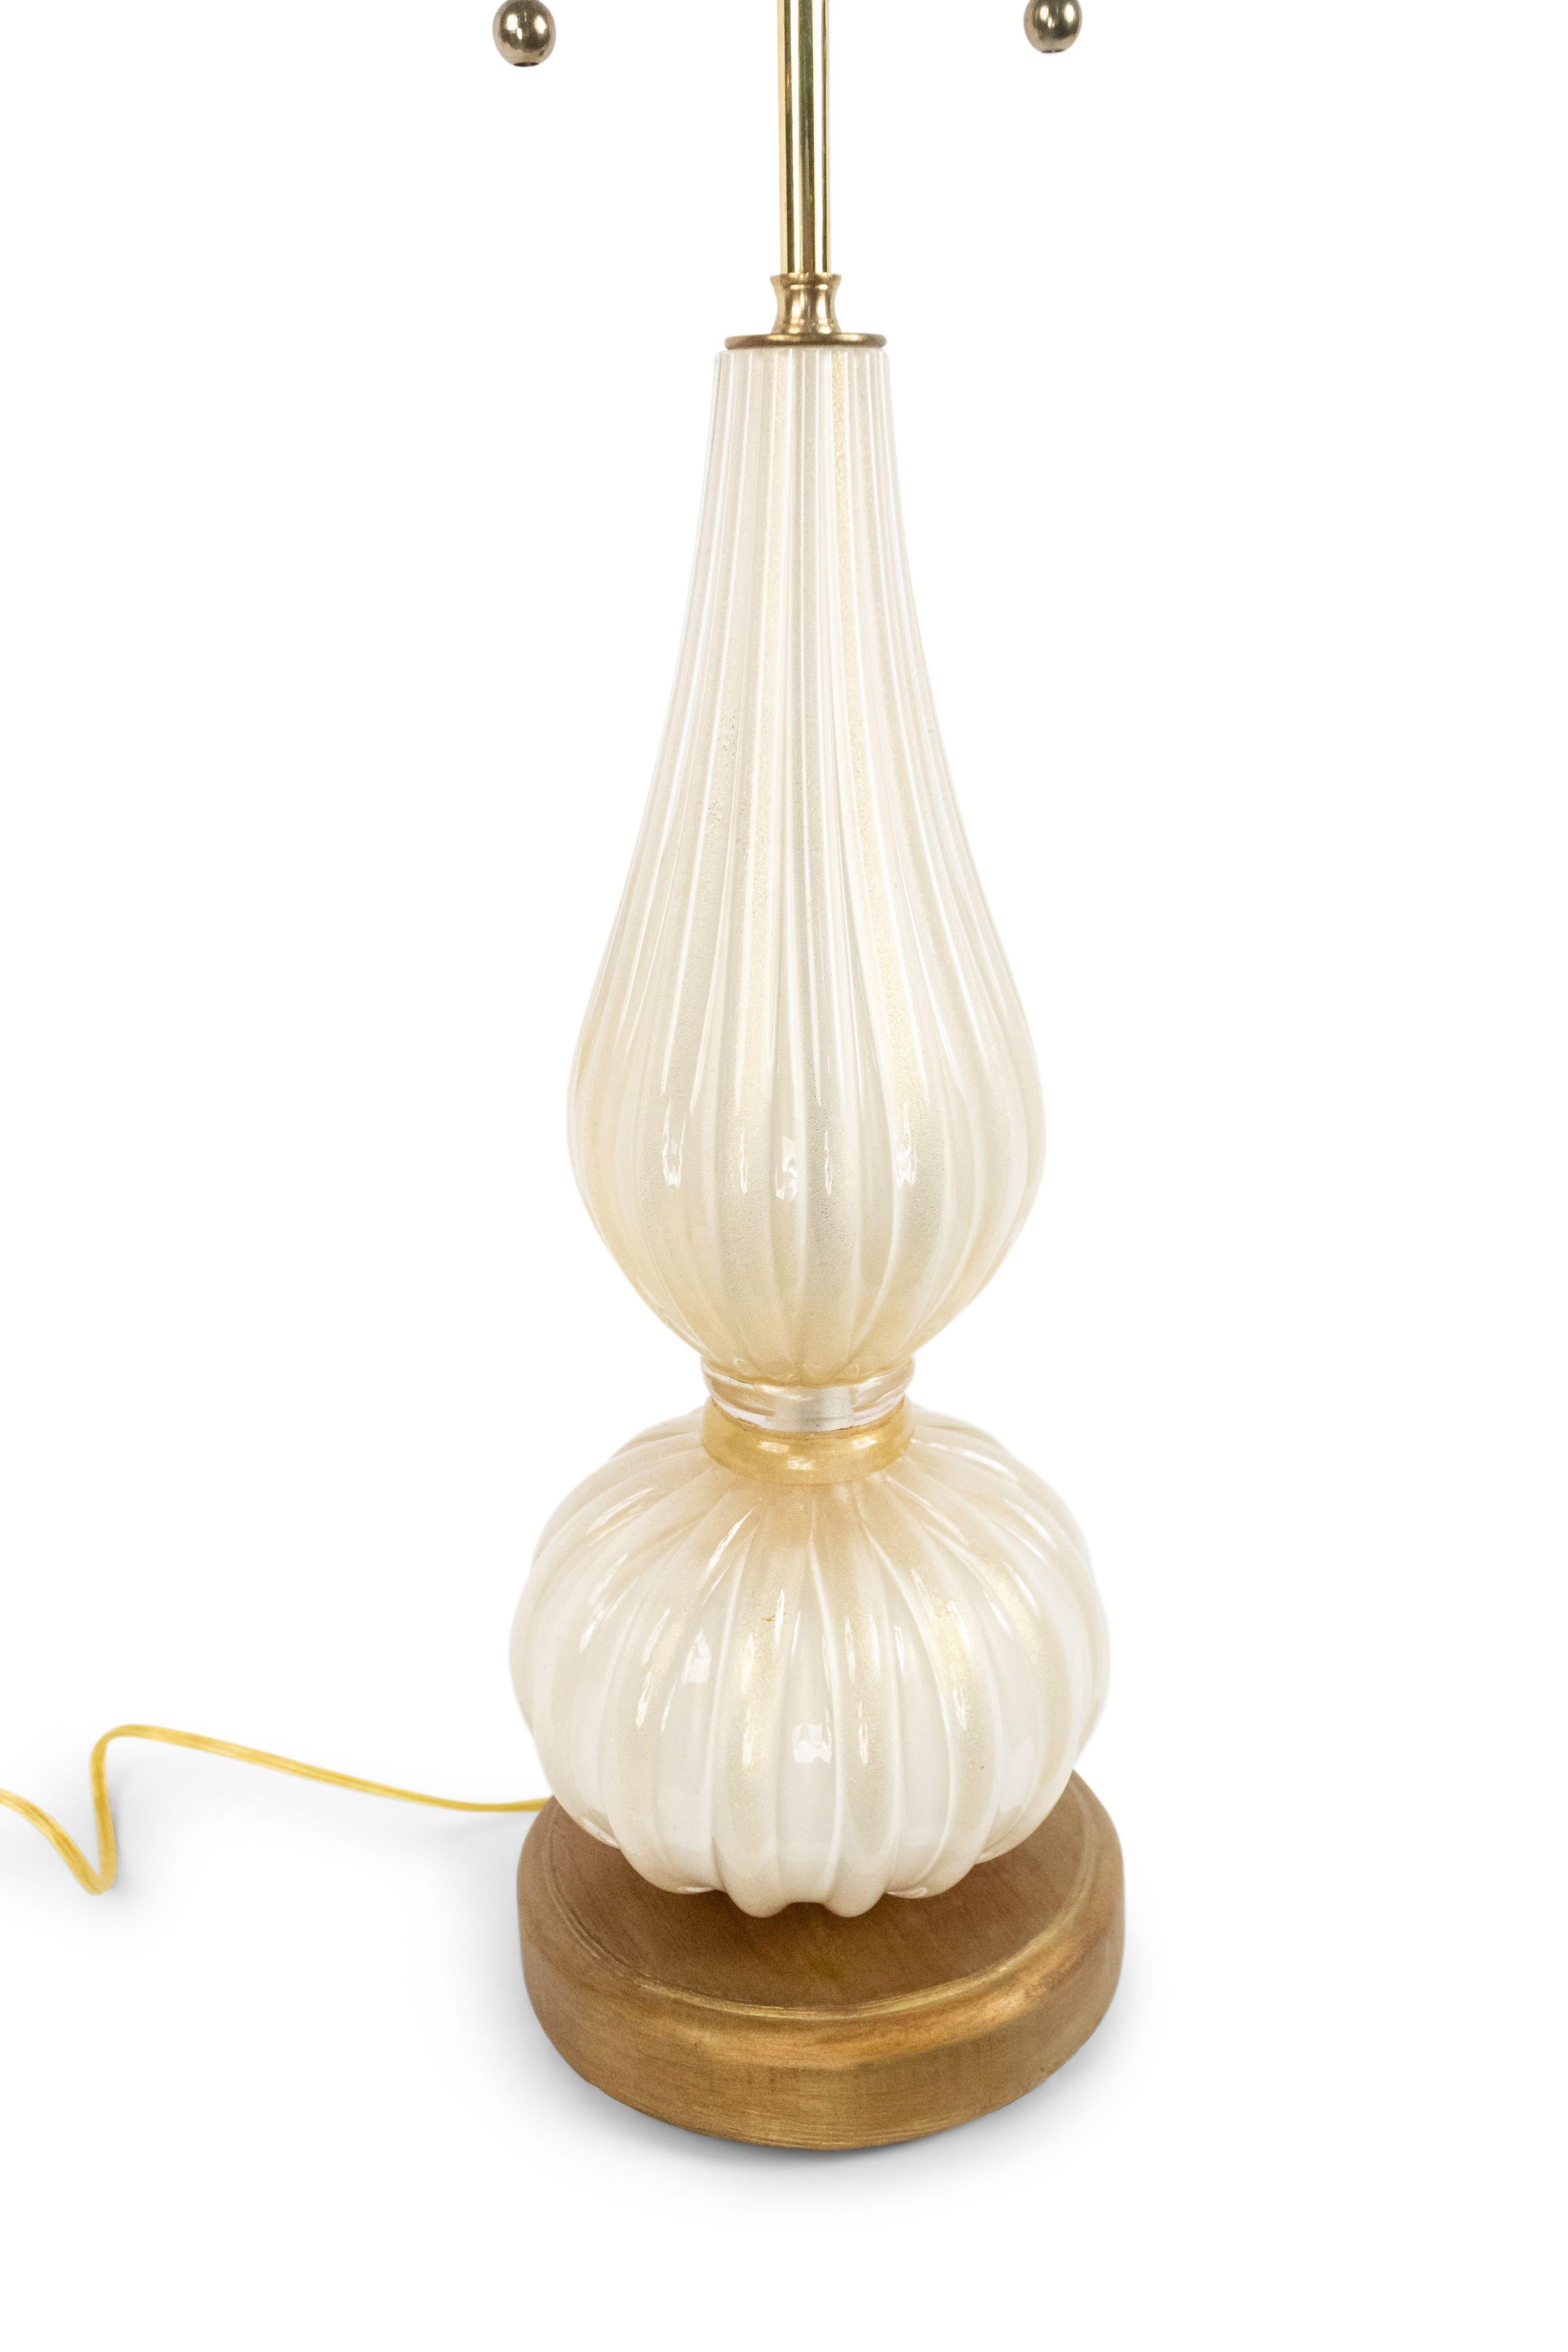 20th Century Italian Midcentury Style White Glass Table Lamp